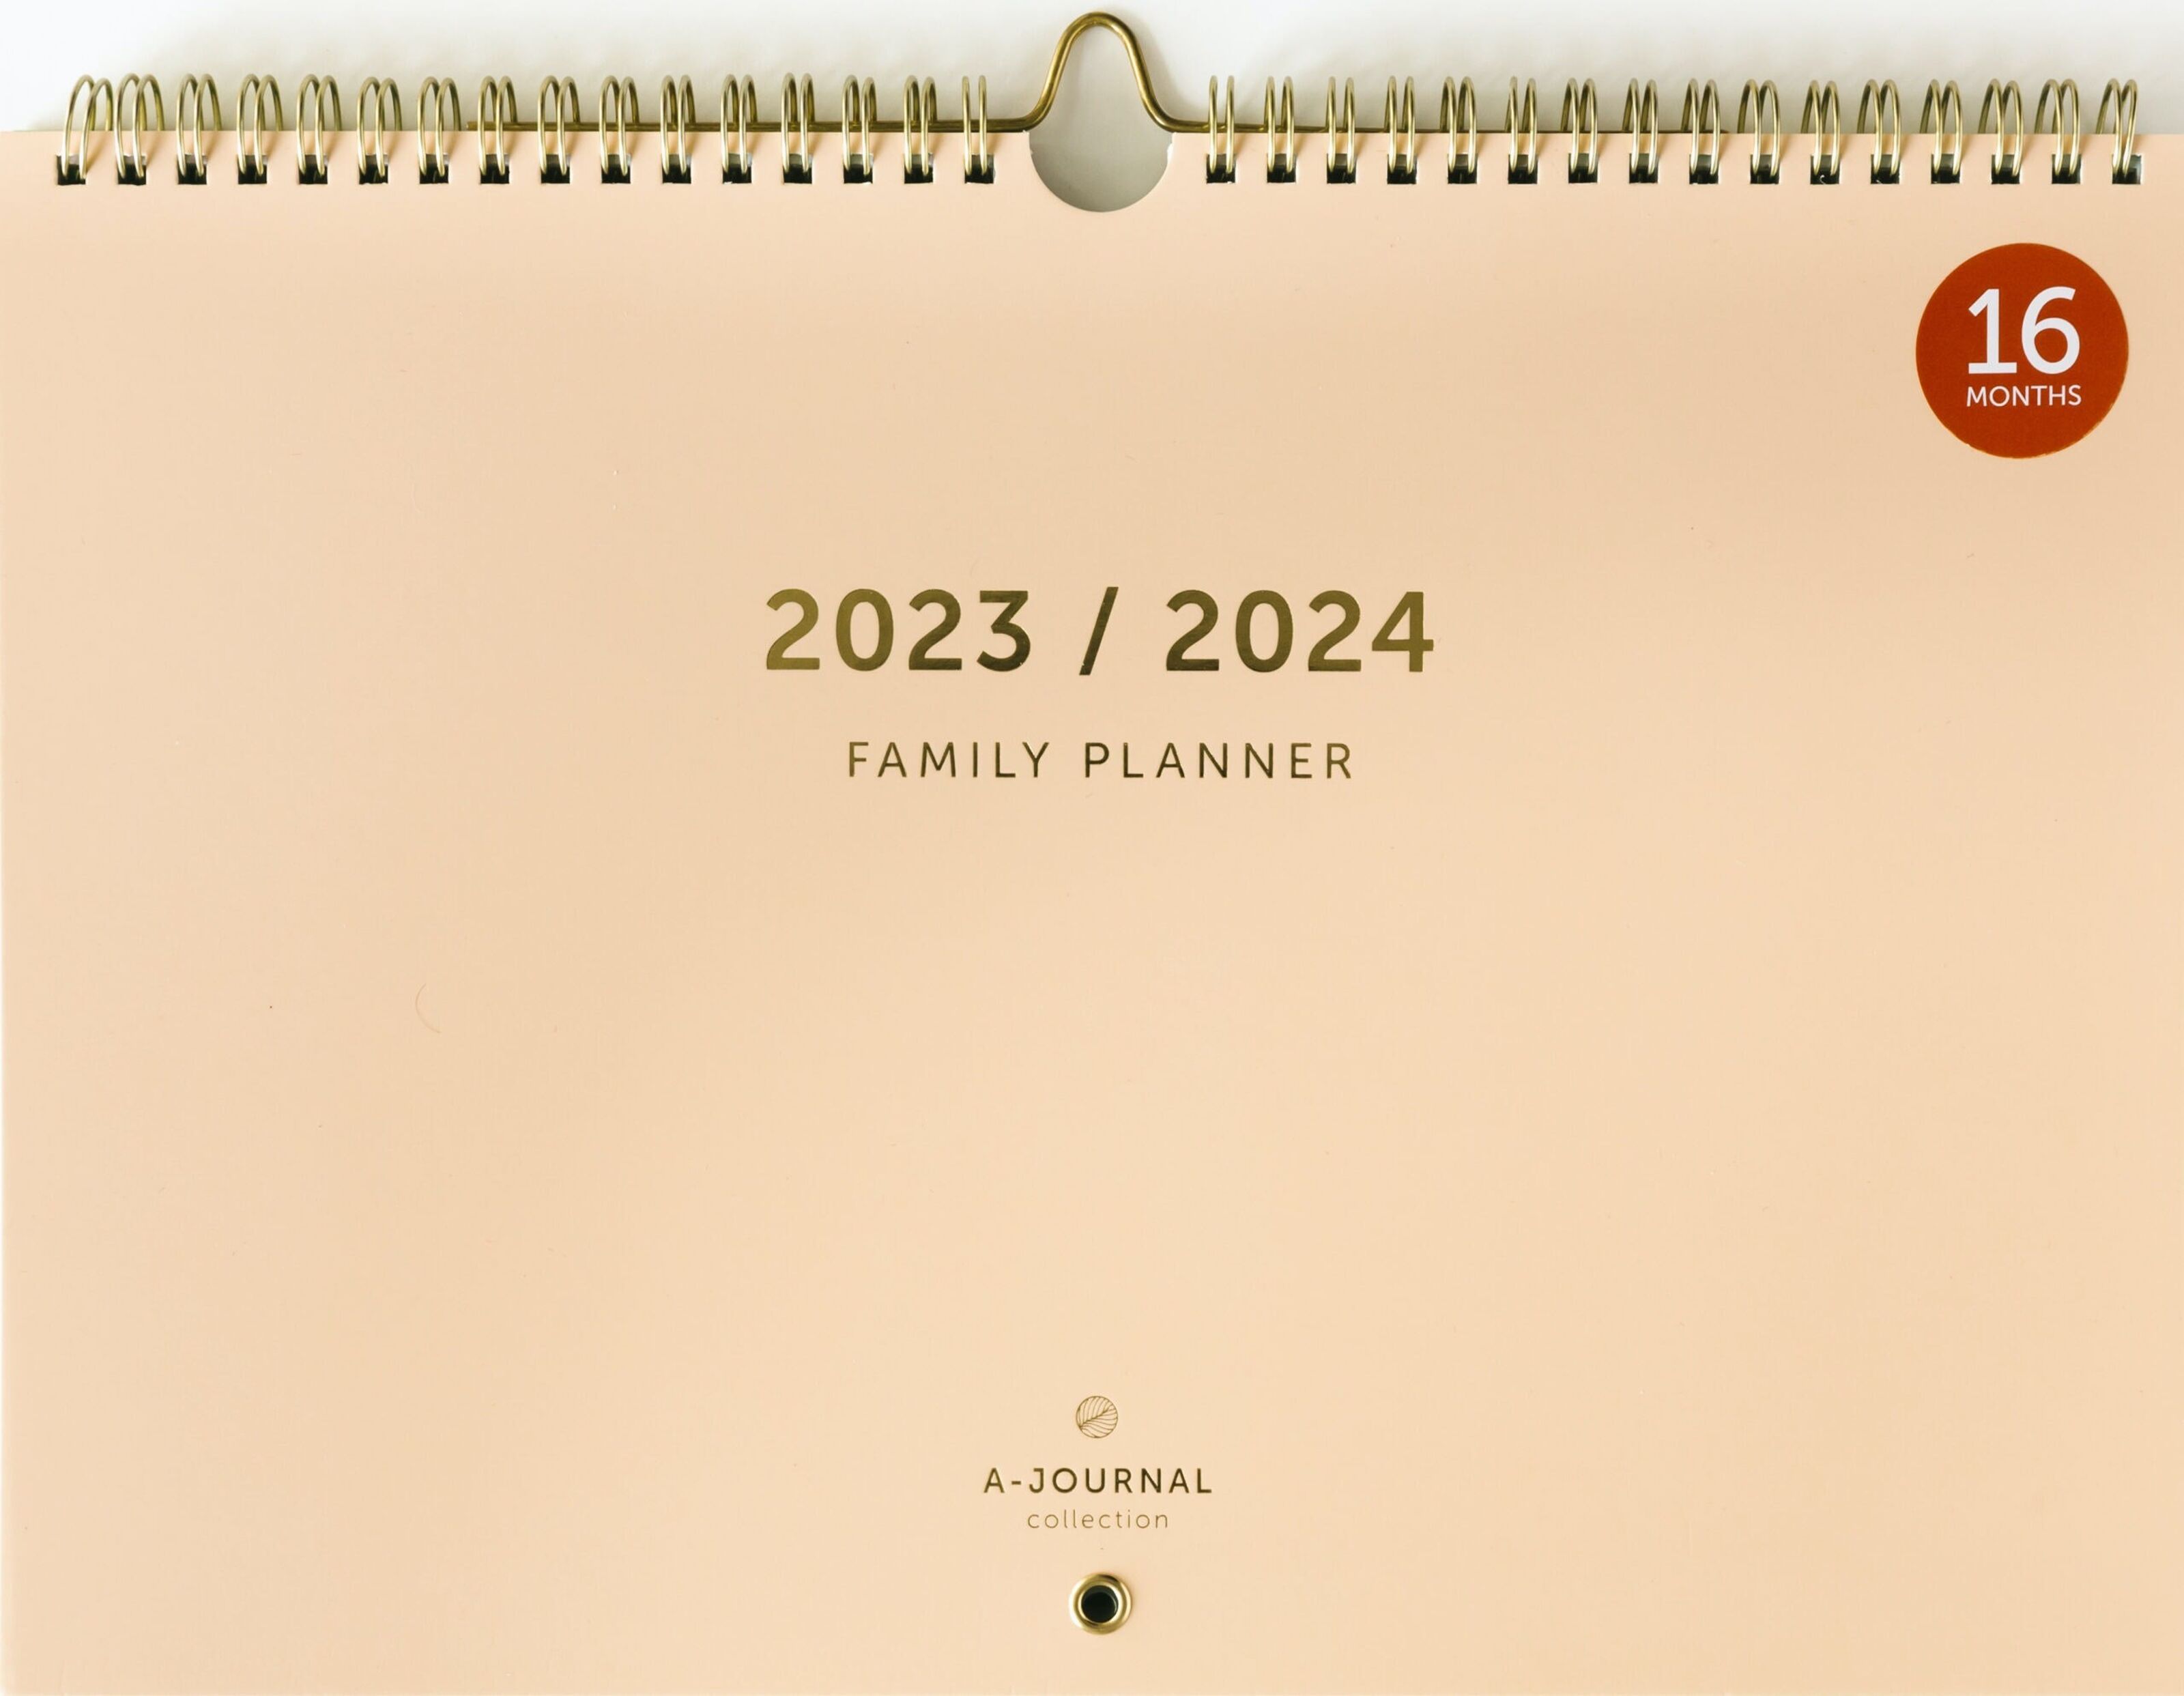 Achat Agenda familial A-Journal 16 Maanden 2023 / 2024 - Beige en gros